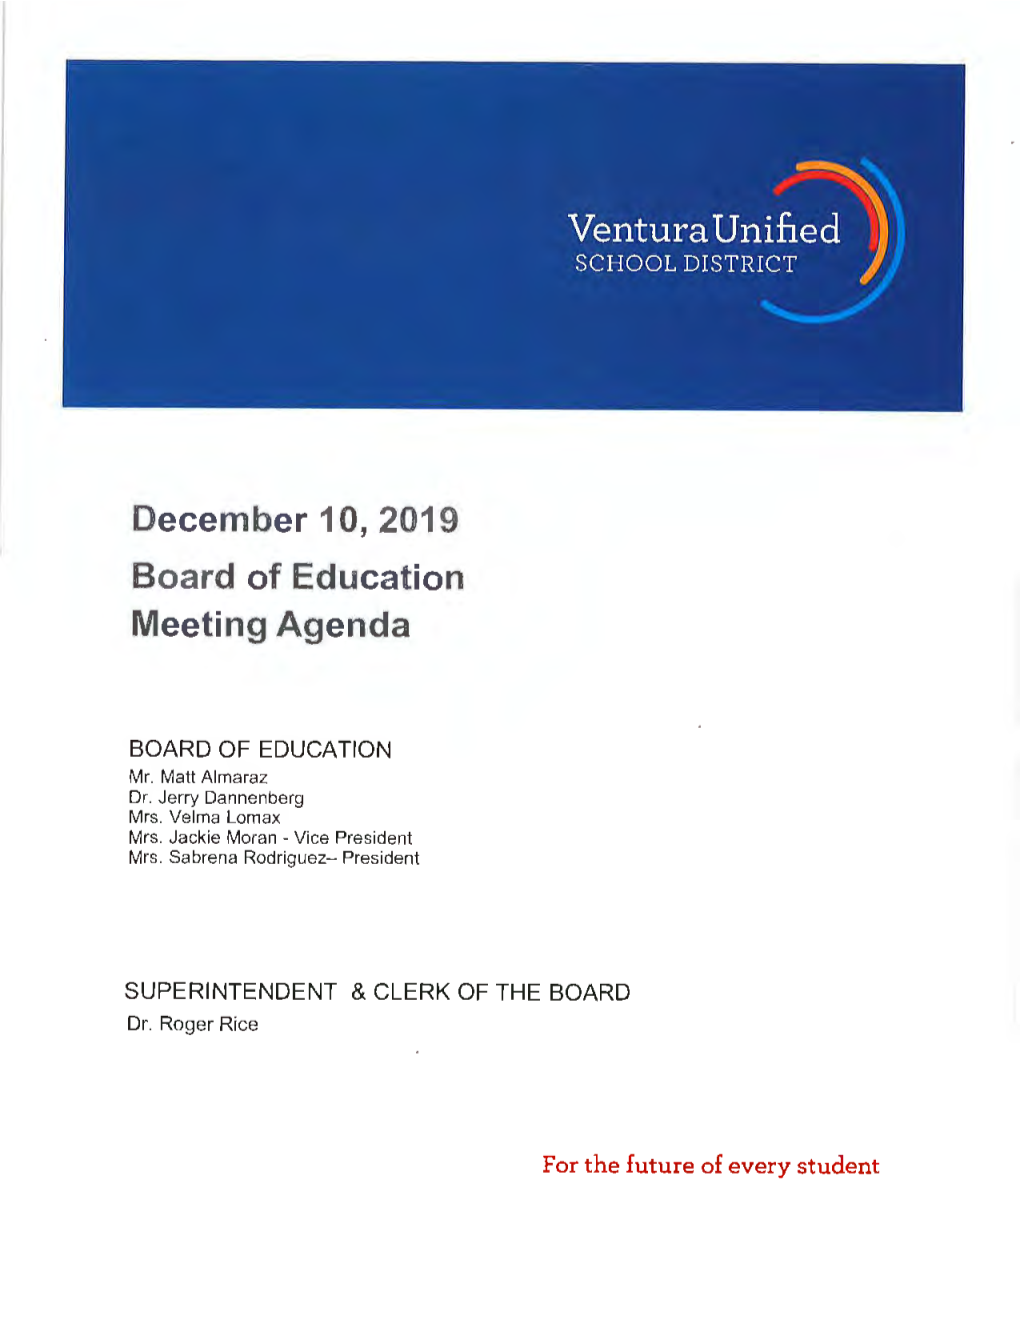 December 10, 2019 Board of Education Meeting Agenda